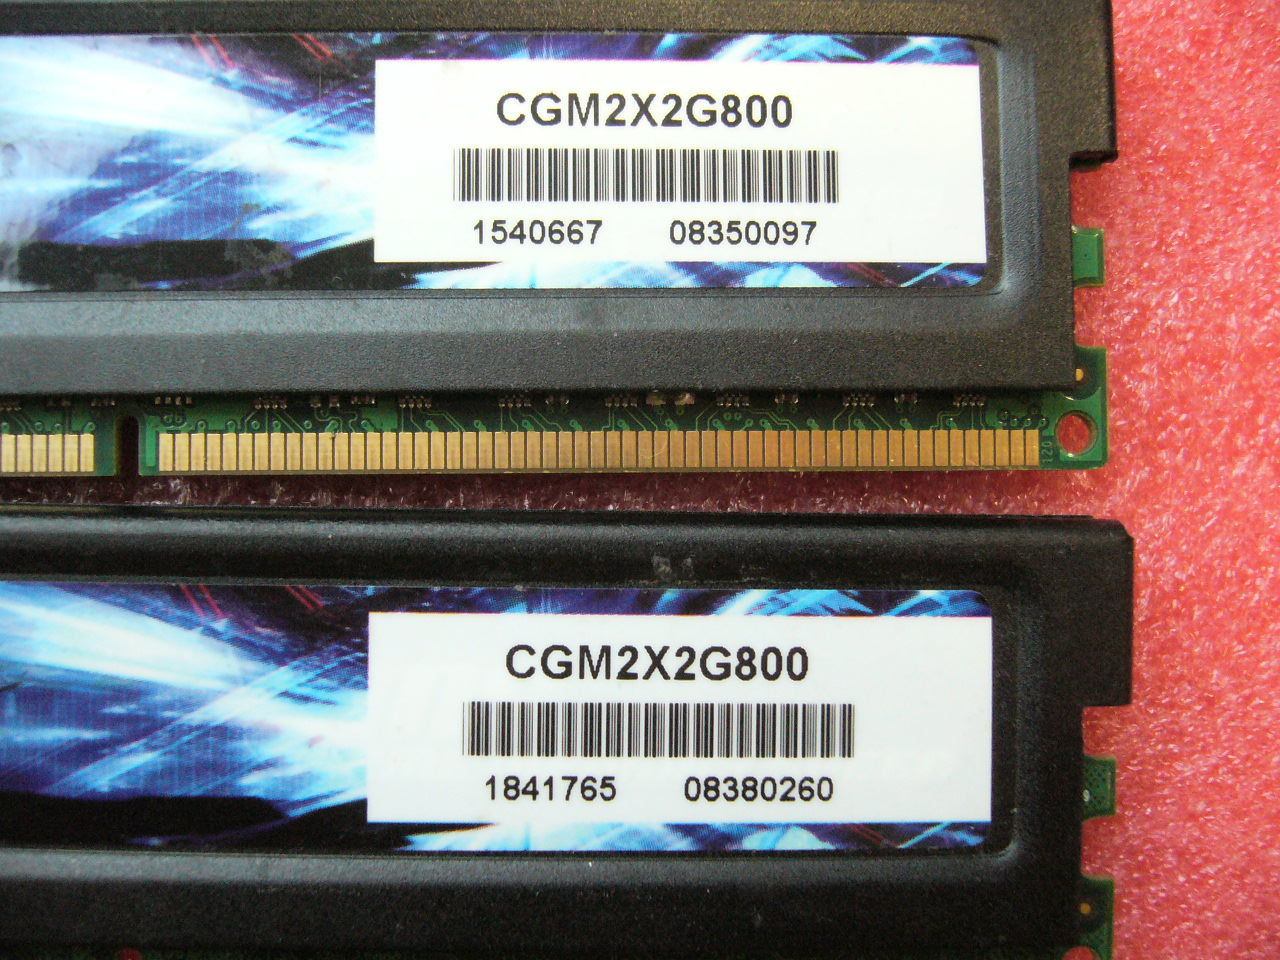 QTY 1x 2GB DDR2 800Mhz non-ECC desktop memory CORSAIR CGM2X2G800 - Click Image to Close